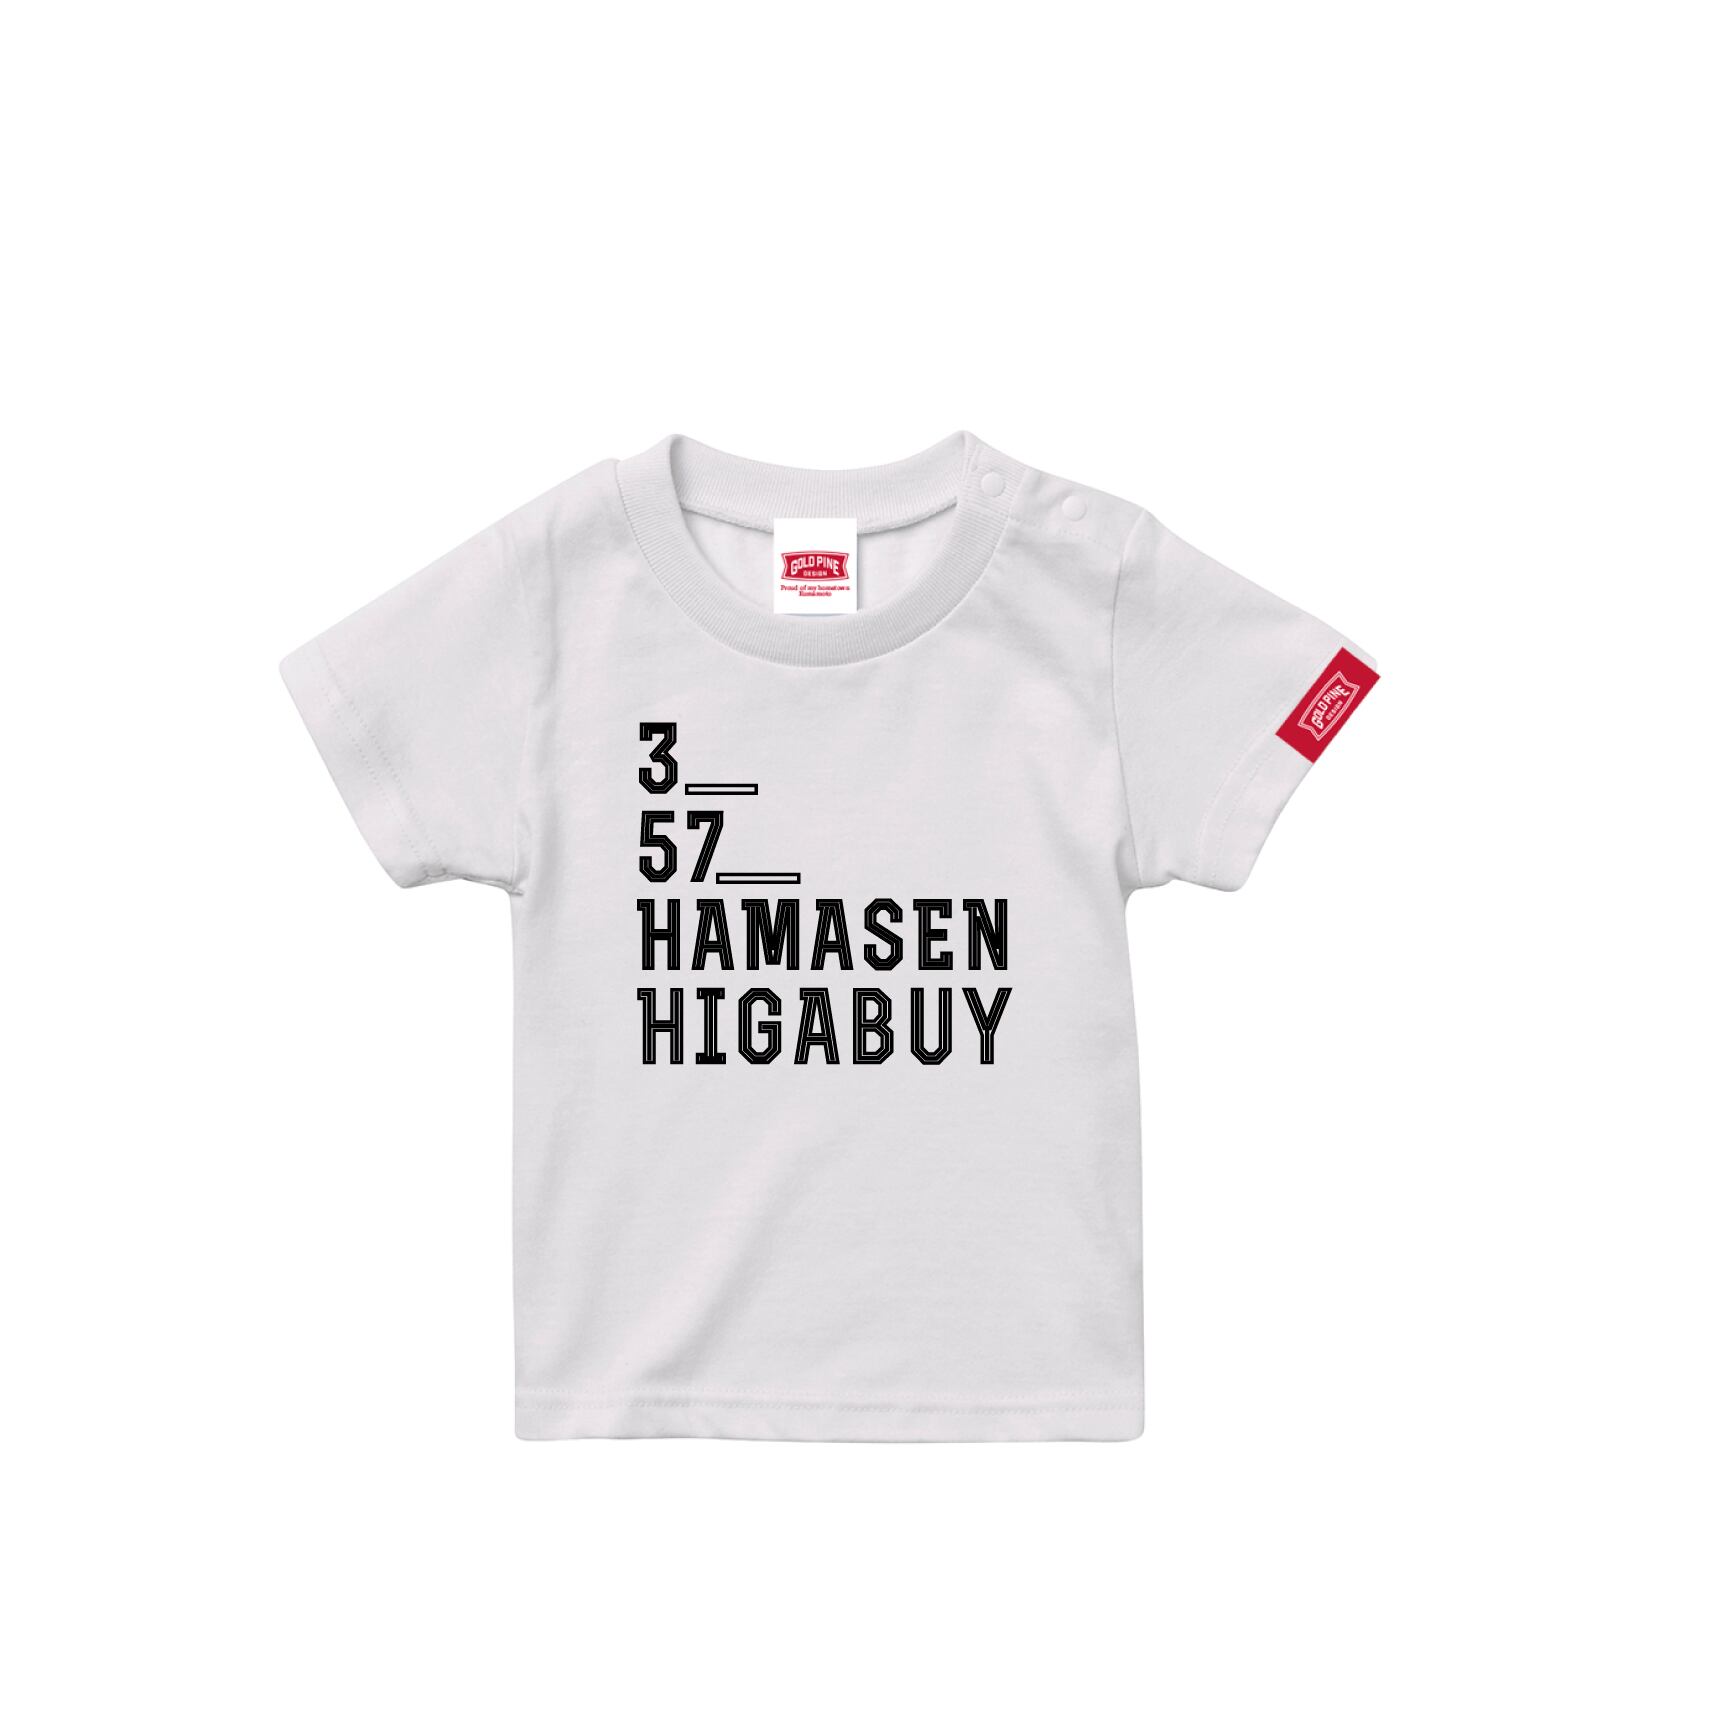 HAMASENHIGBUY-Tshirt【Kids】White